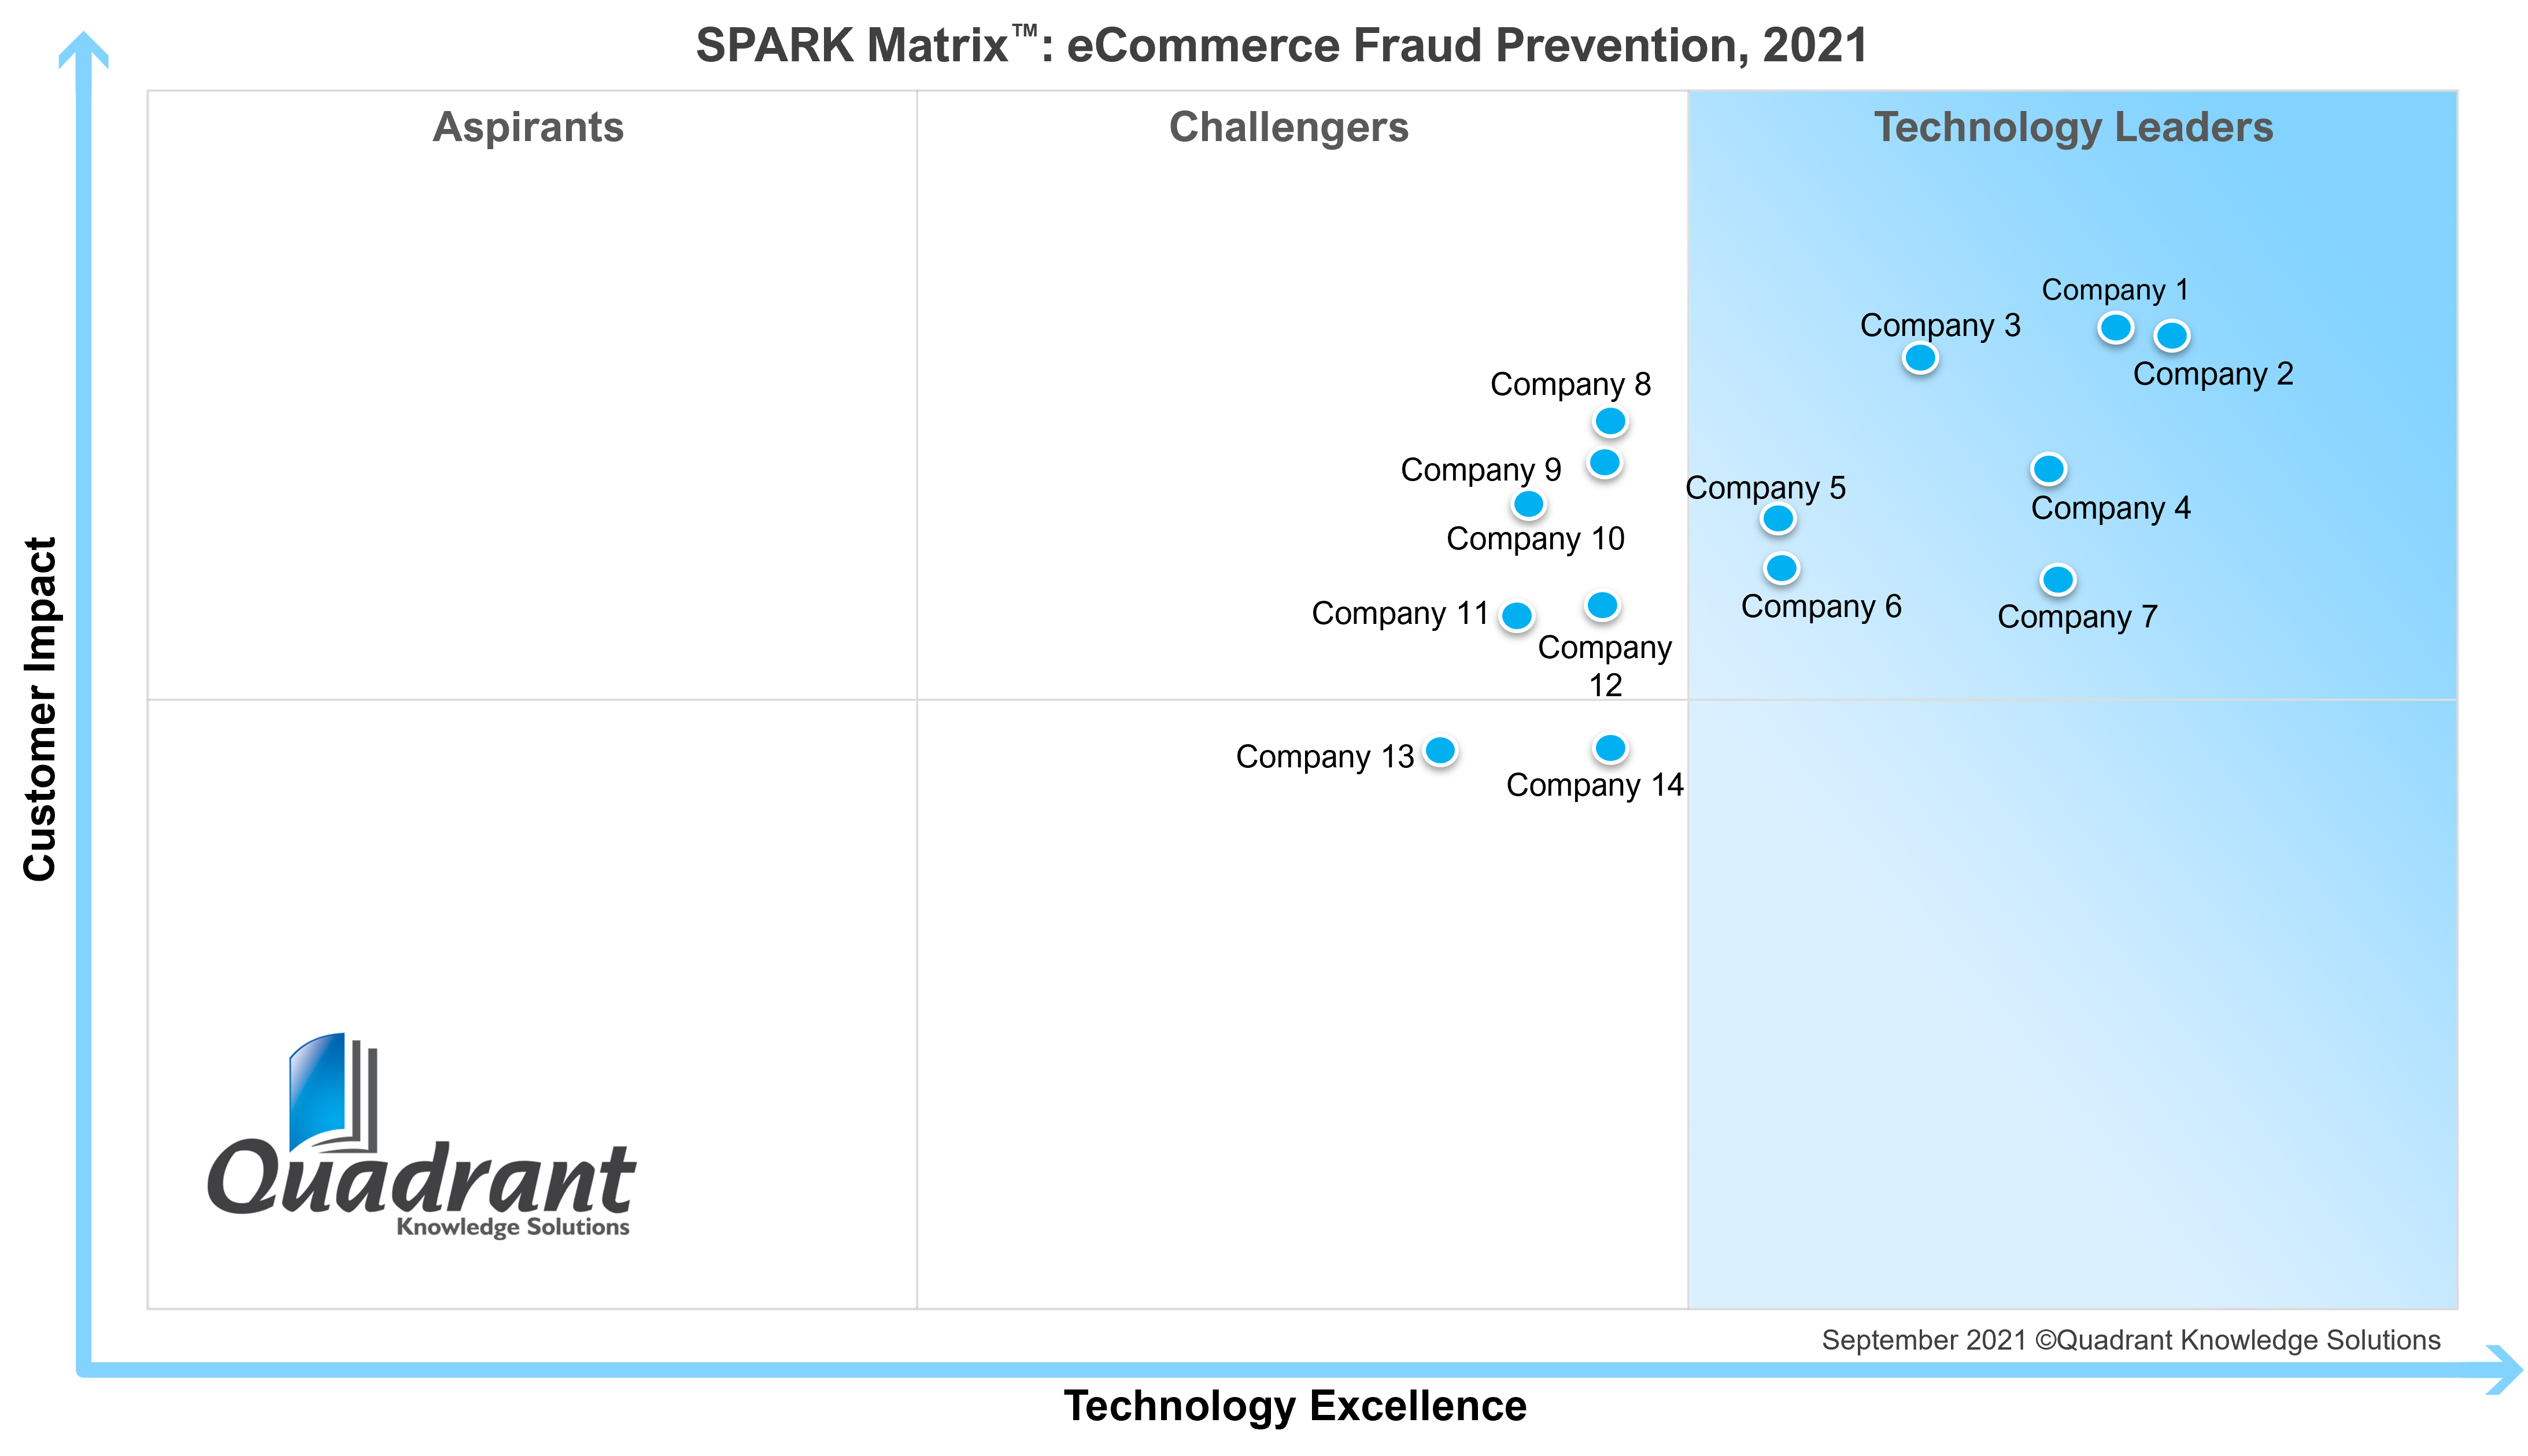 eCommerce Fraud Prevention, 2021